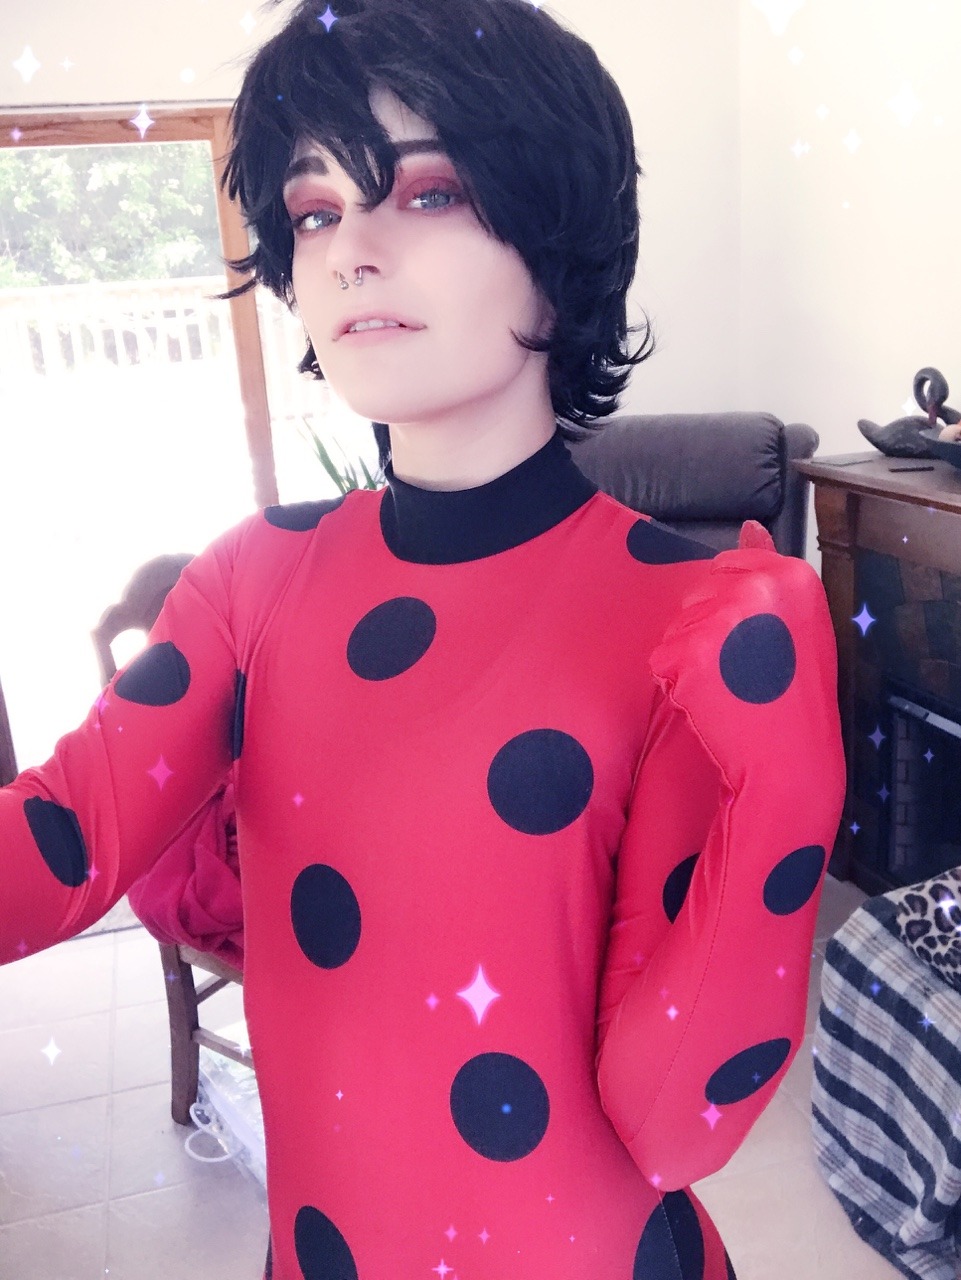 Nonbinary Ladybug Tumblr